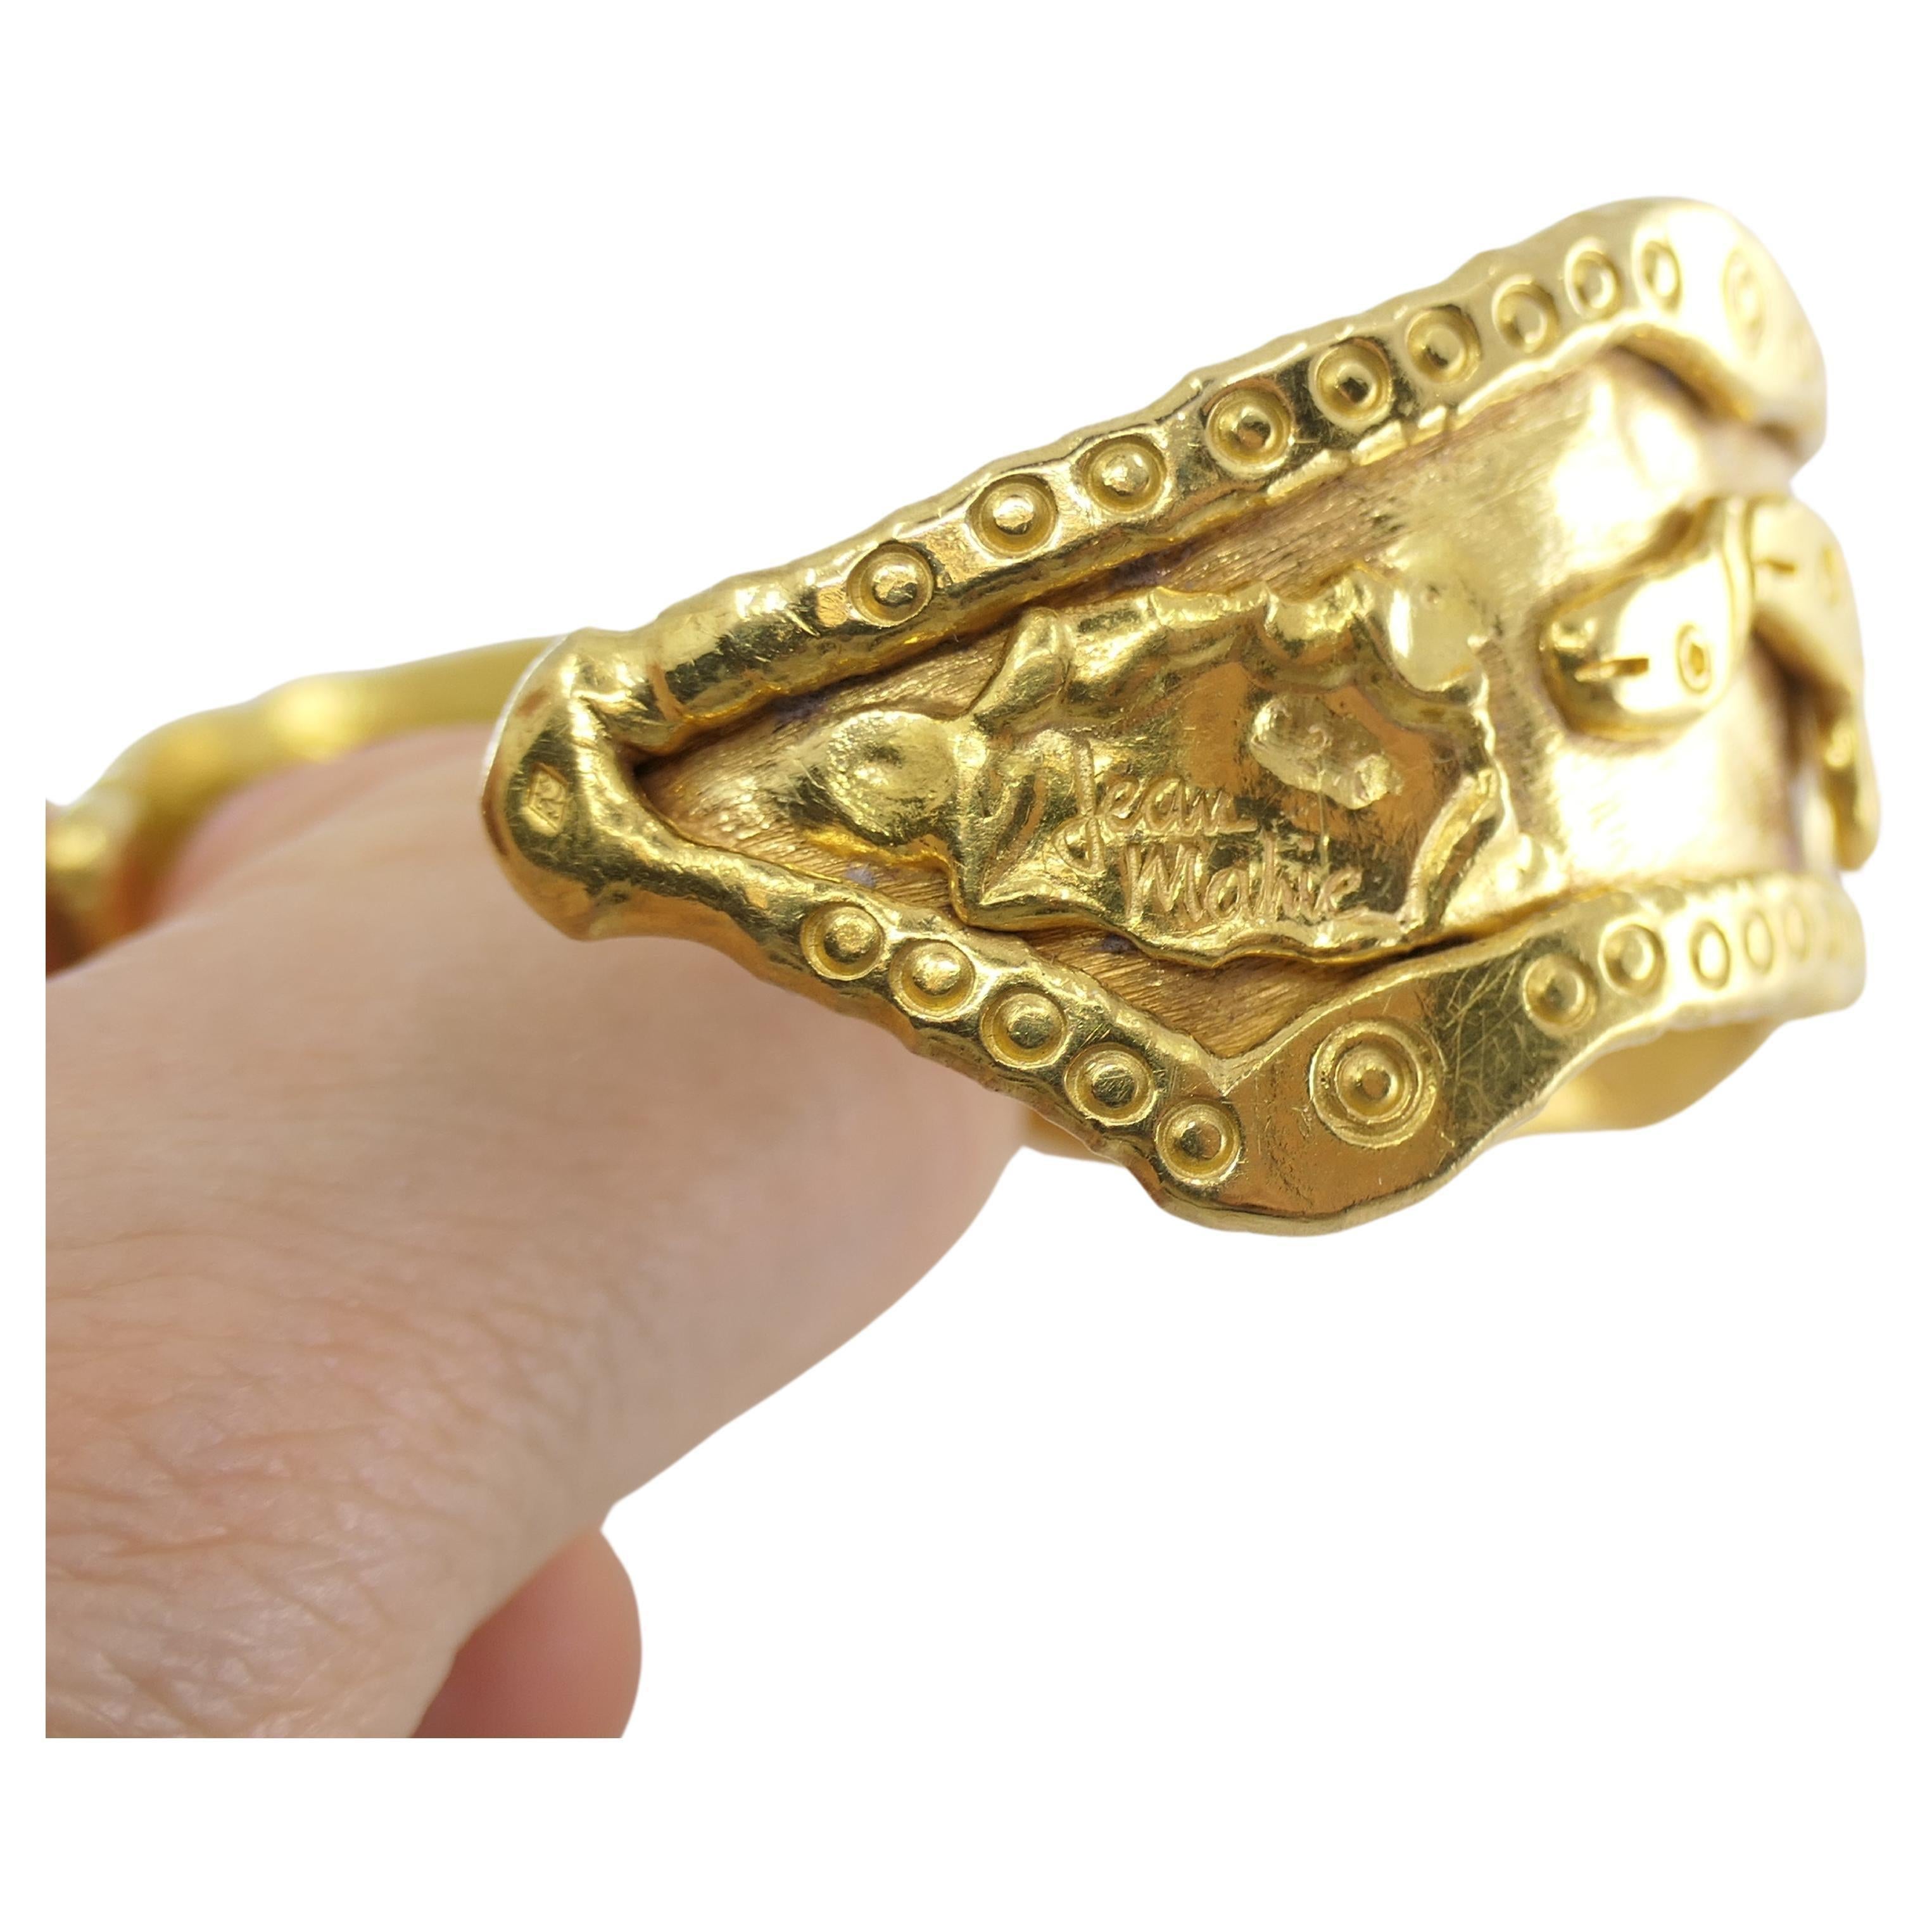 Jean Mahie Charming Monsters Cuff Bracelet 22k Gold 4